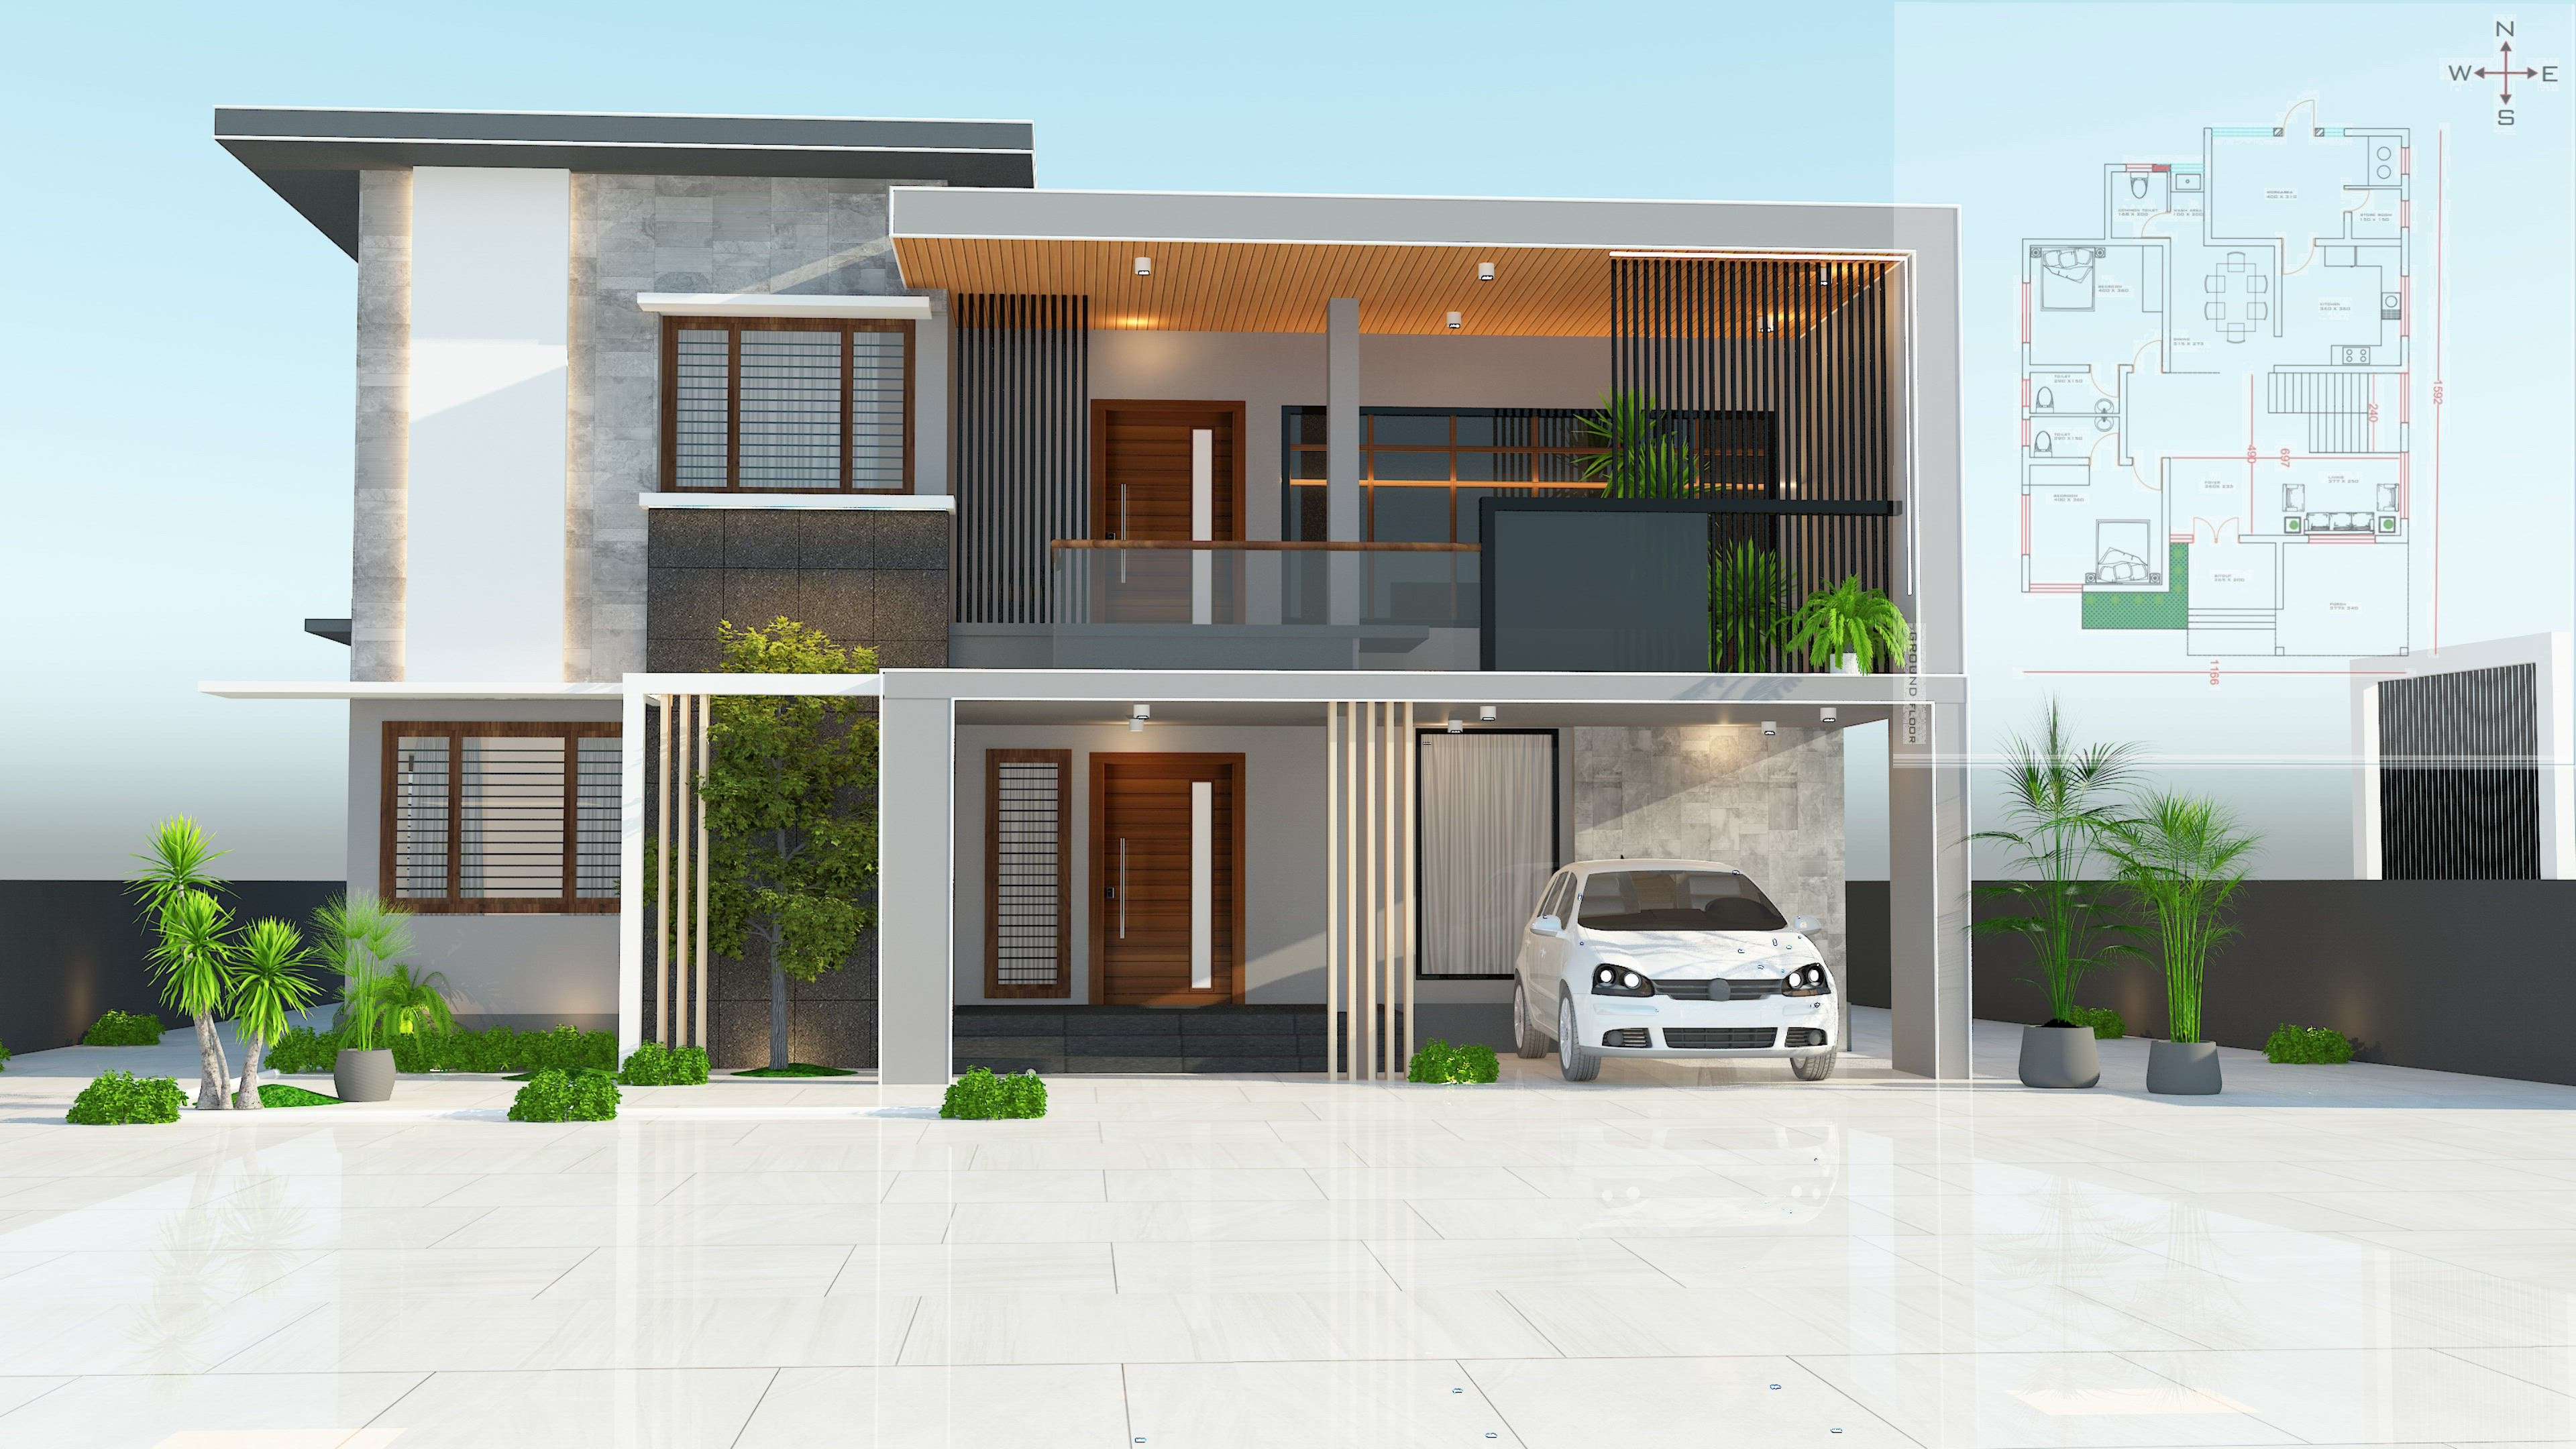 ON GOING PROJECT: @Kolathvayal Kannur . 2854 sqft Residence 
@Mr.shamsheer 
Kannur 
#koloapp  #kannurinterior 
#exterior_ #HouseConstruction #Kannur #Architectural&Interior 
BLANC DESIGN STUDIO KANNAPURAM 
6282825712
6235603322